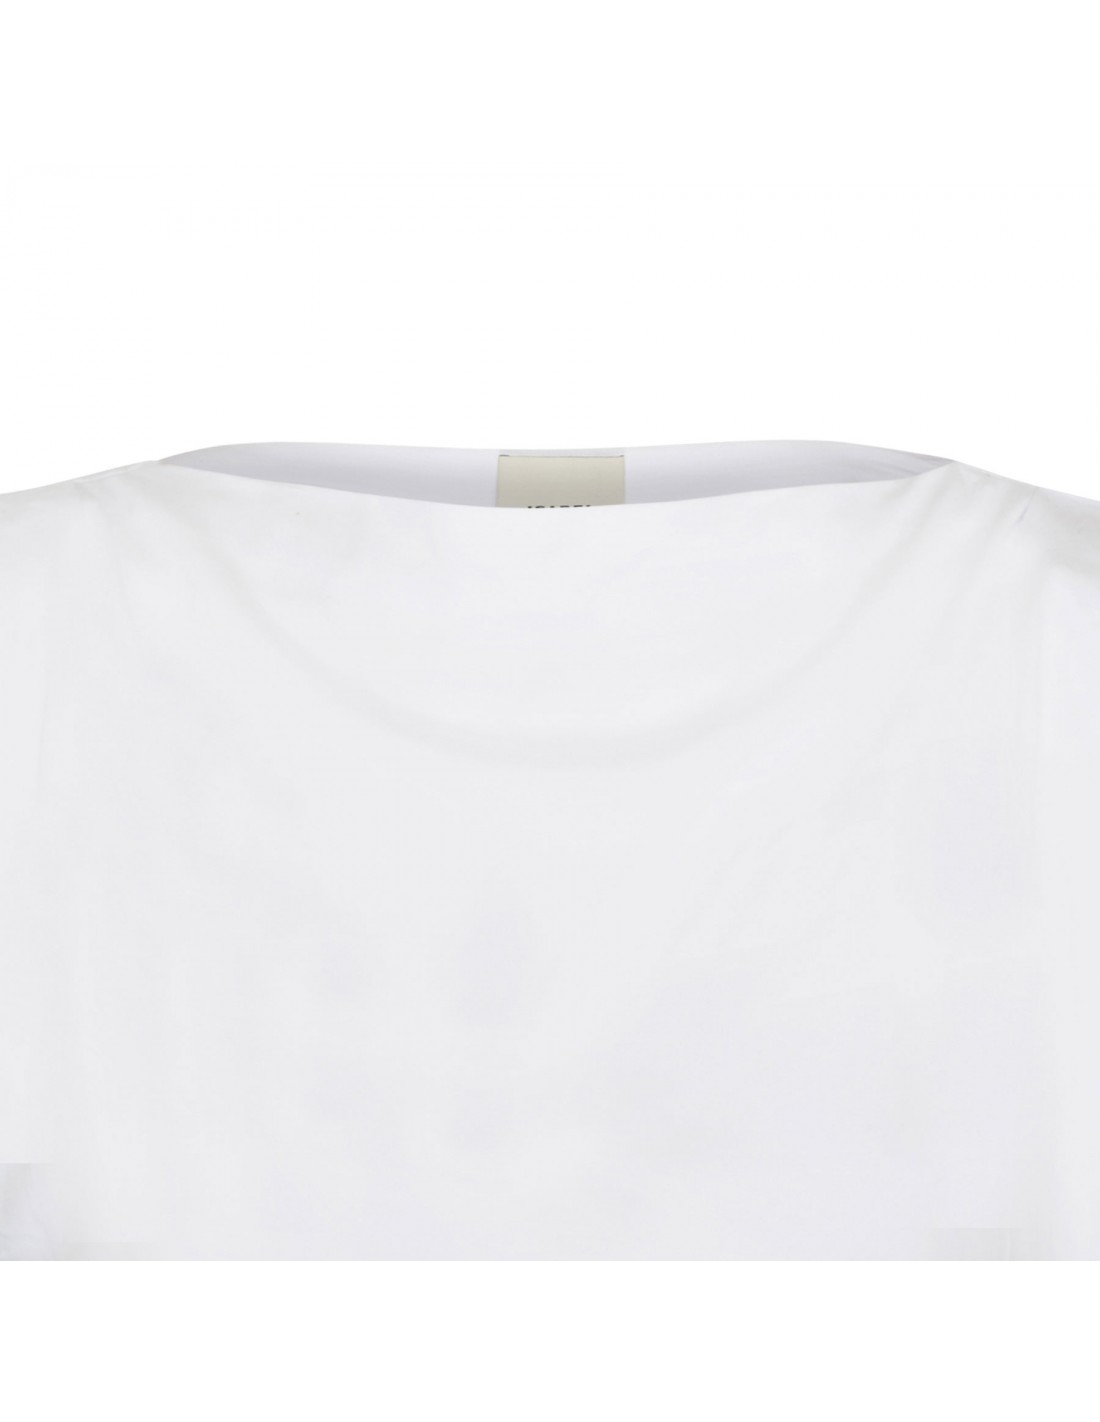 Sebani white T-shirt